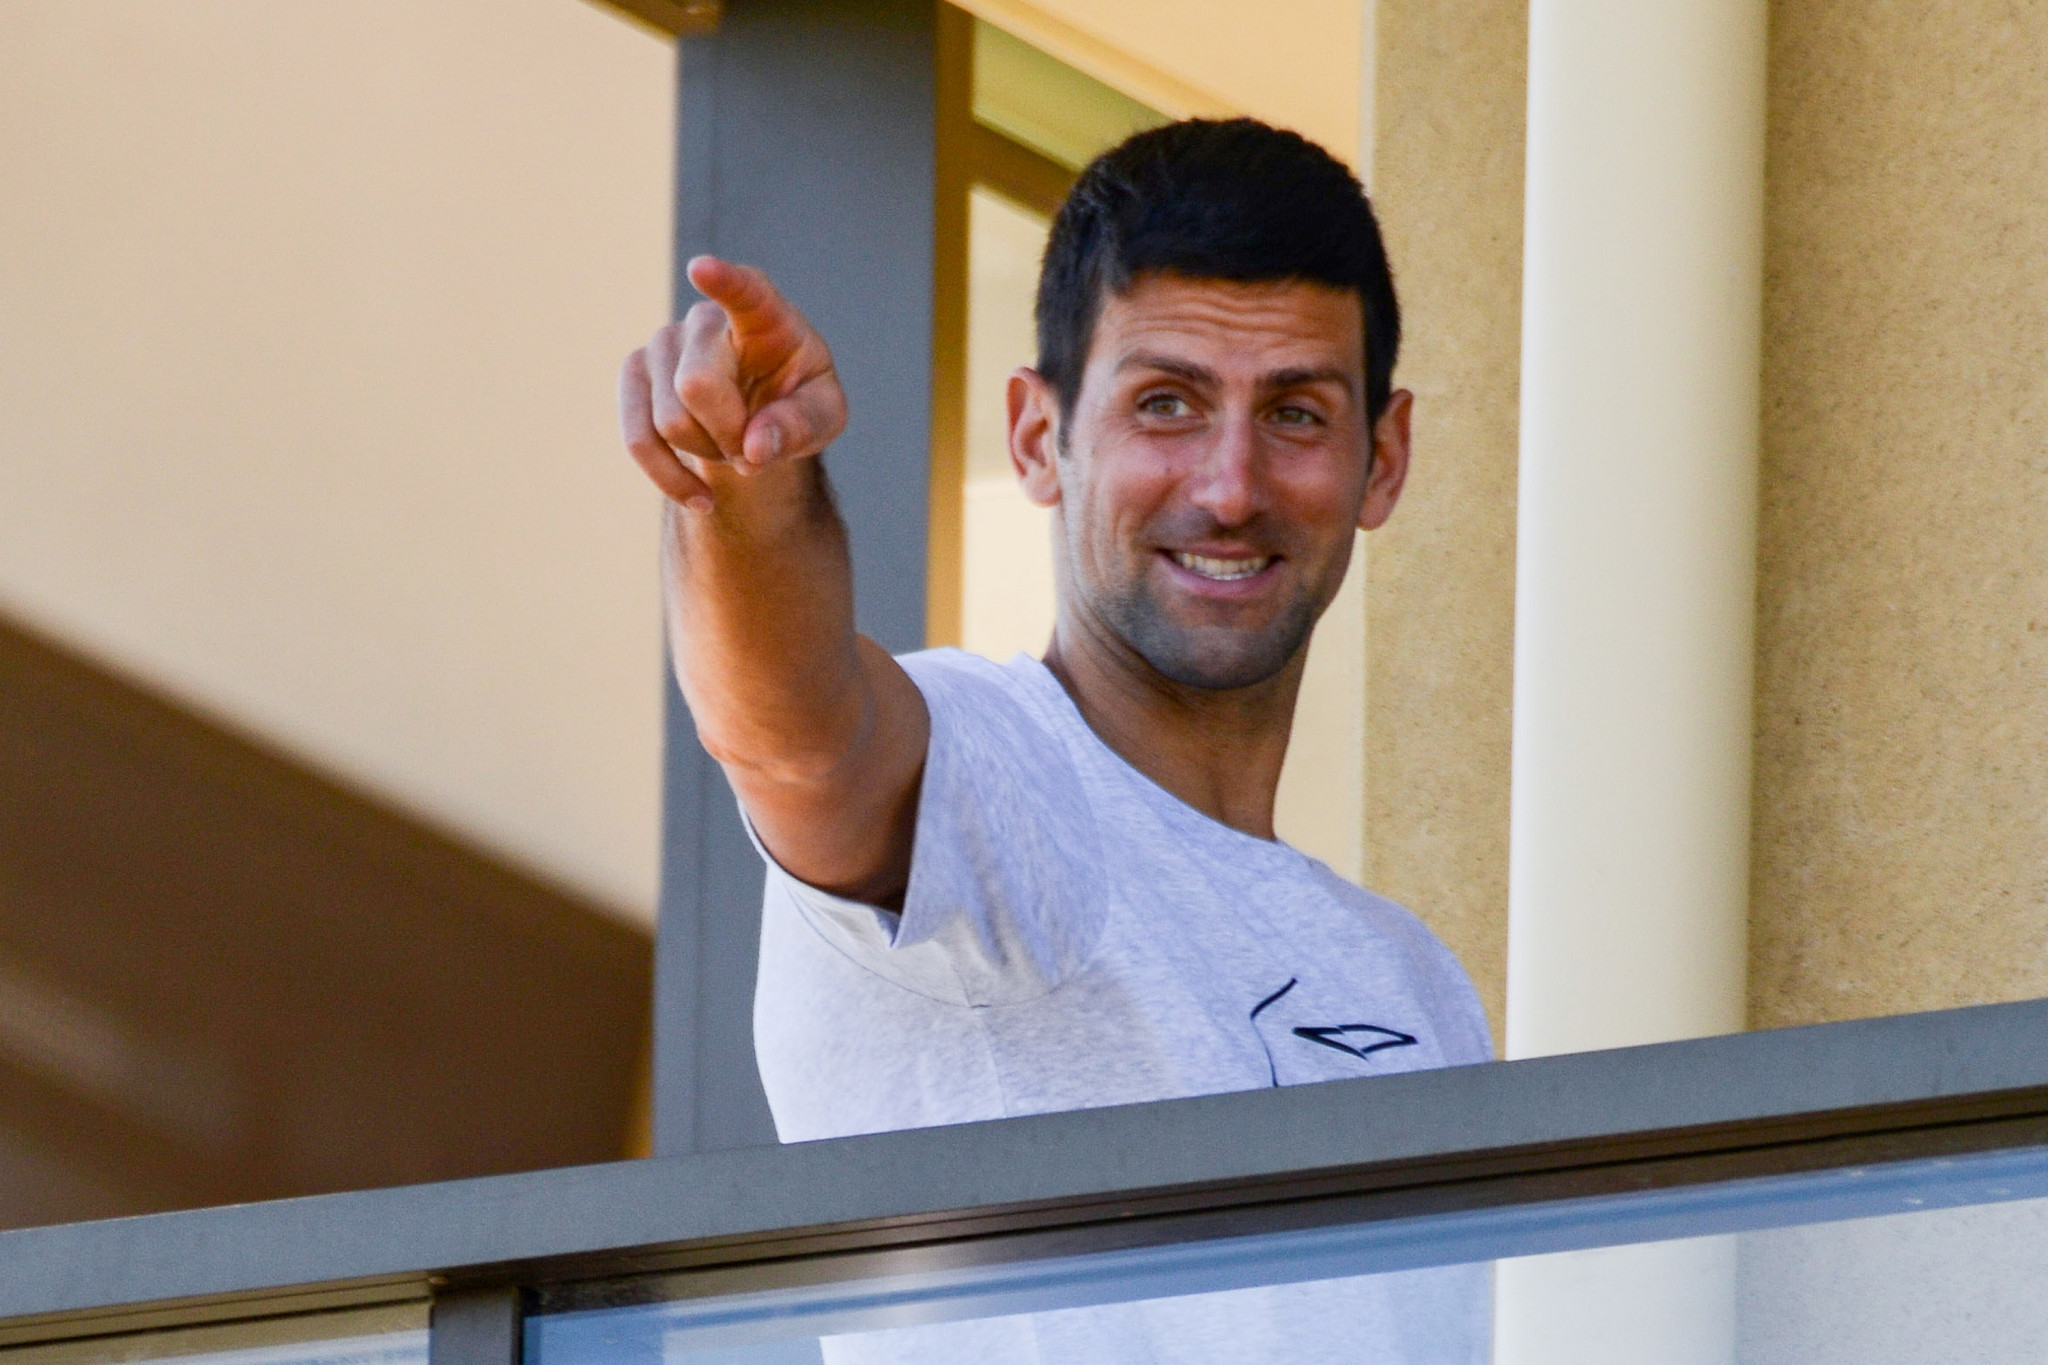 Djokovic claims list of demands to Australian Open organisers was "misconstrued"